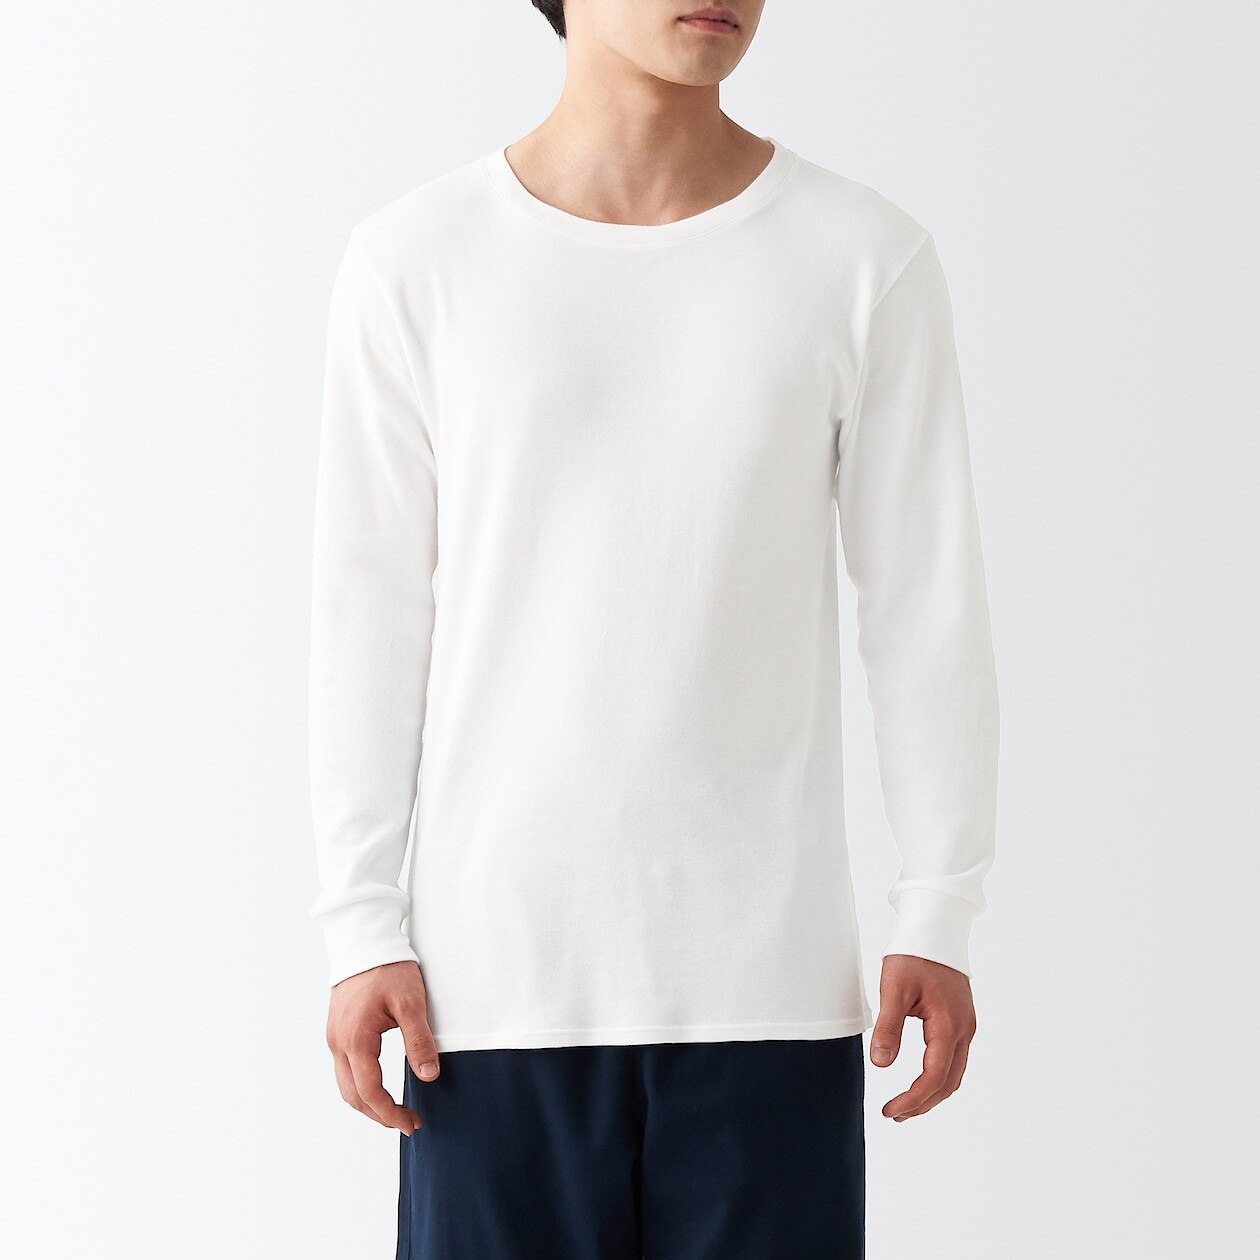 Men's Thick Cotton Crew Neck Long Sleeve T-shirt 2A